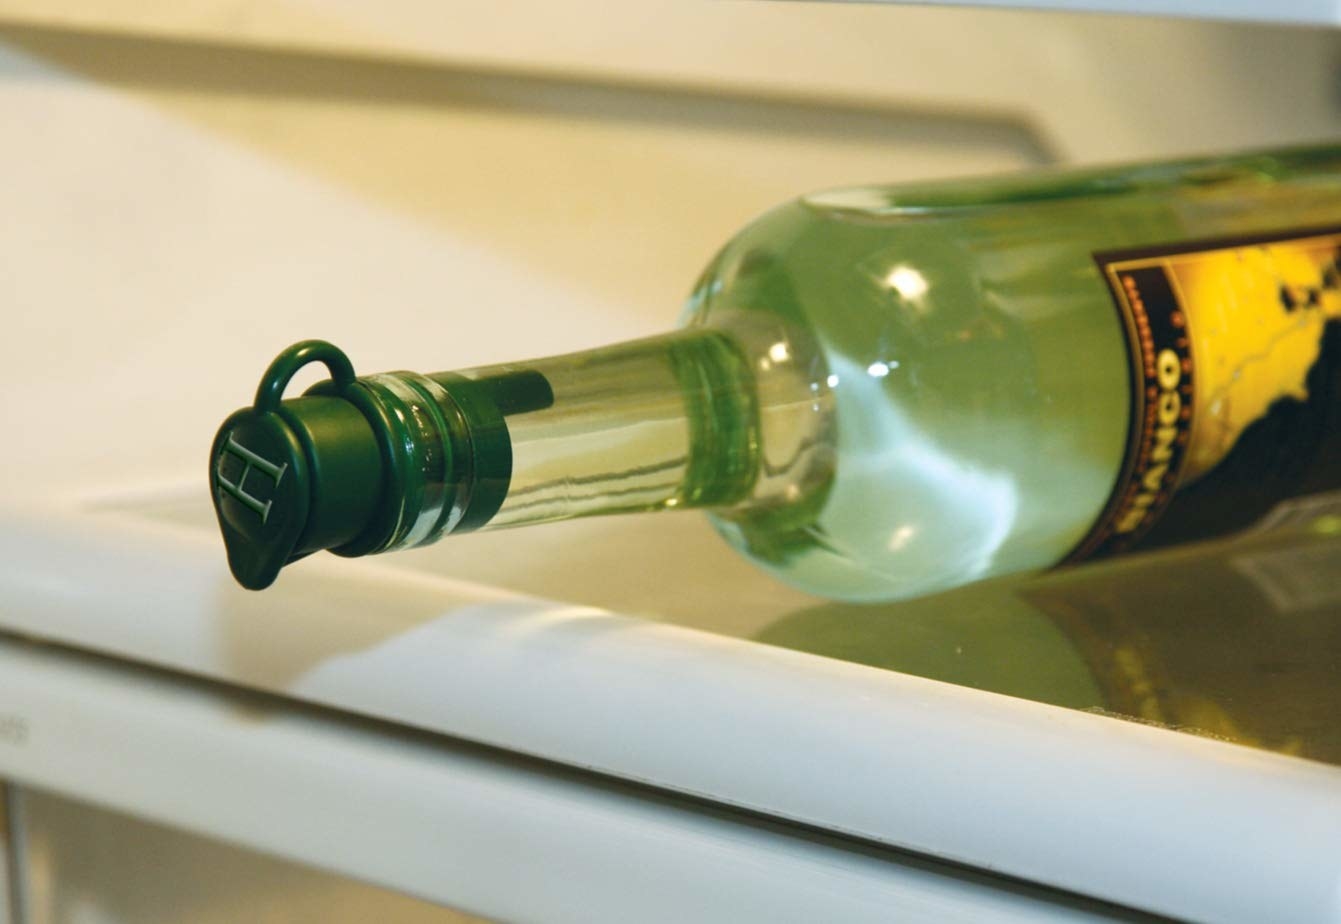 The wine stopper in a bottle on its side